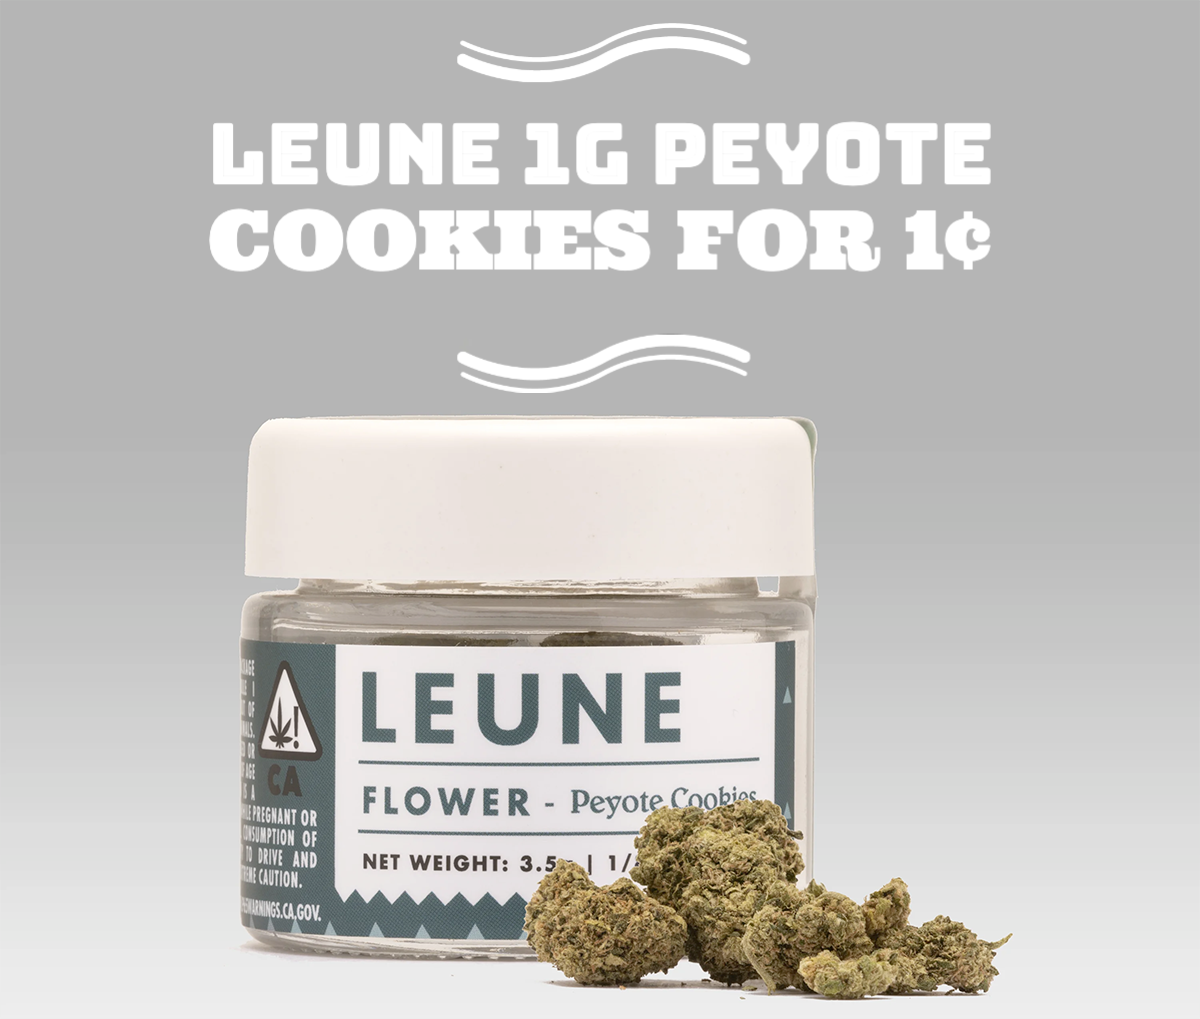 LEUNE 1g Peyote Cookies for 1¢